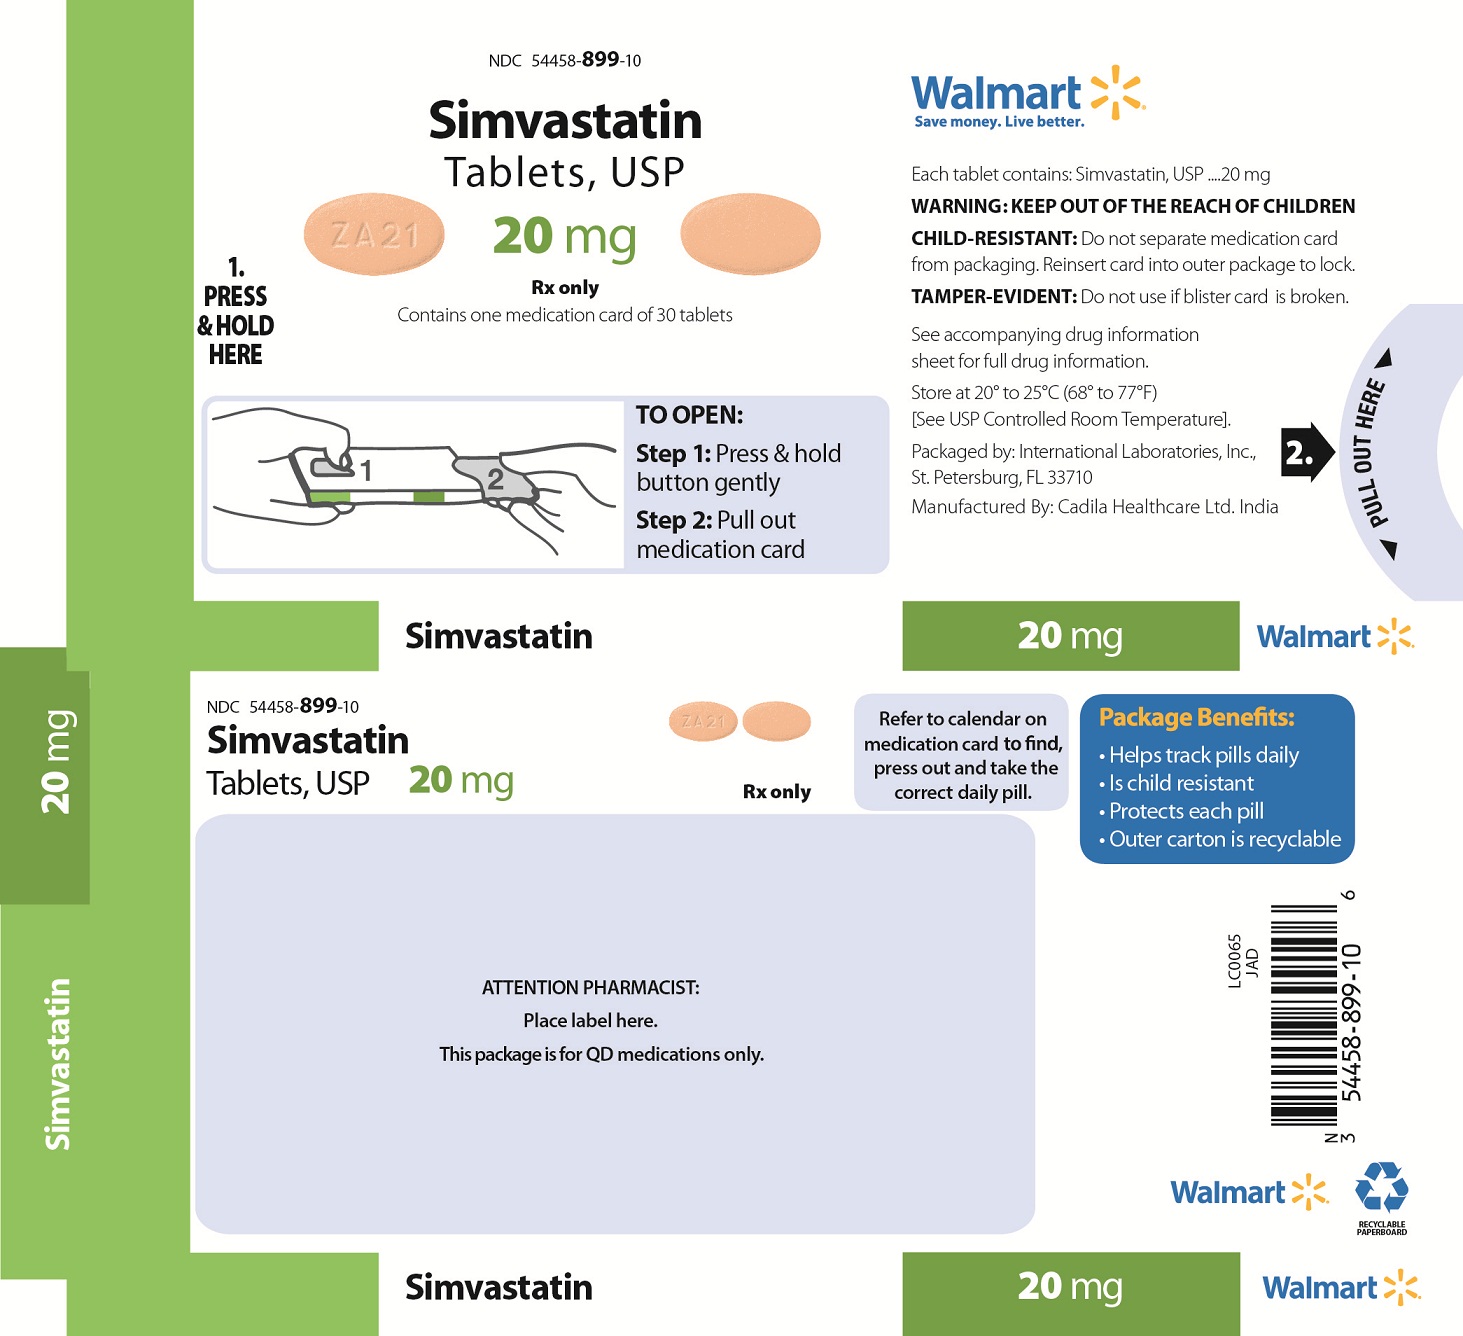 Simvastatin Tablets, USP 20 mg